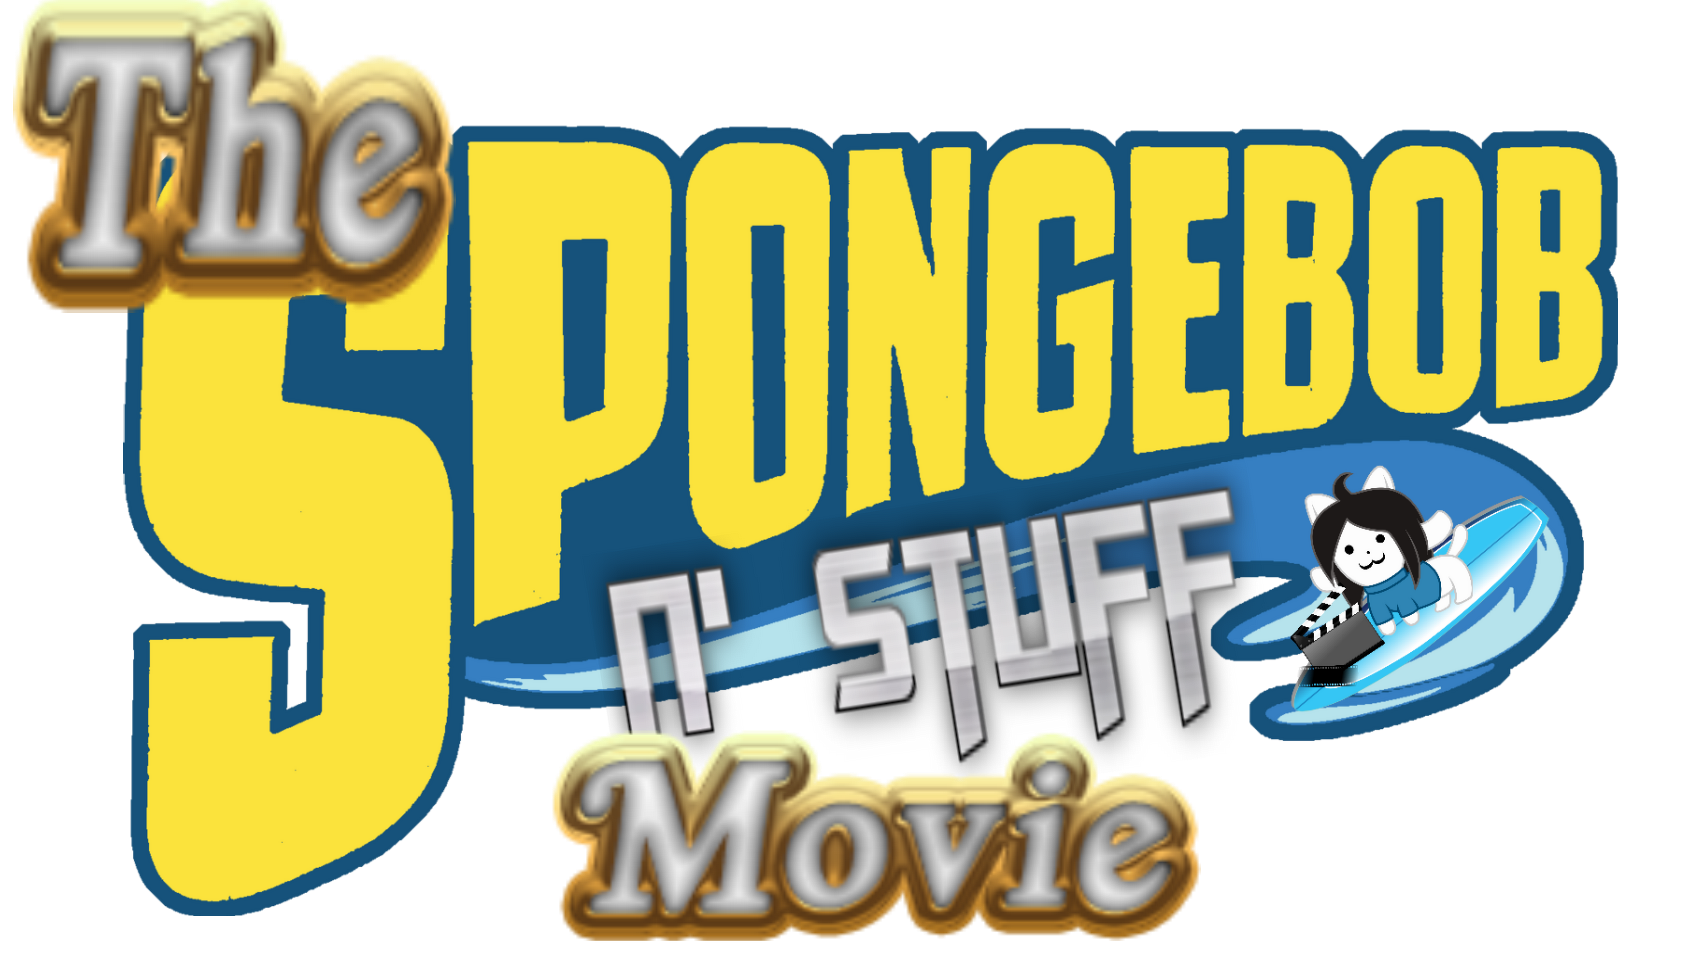 niggative memes on X: Spongebob opening door twitter bird logo on